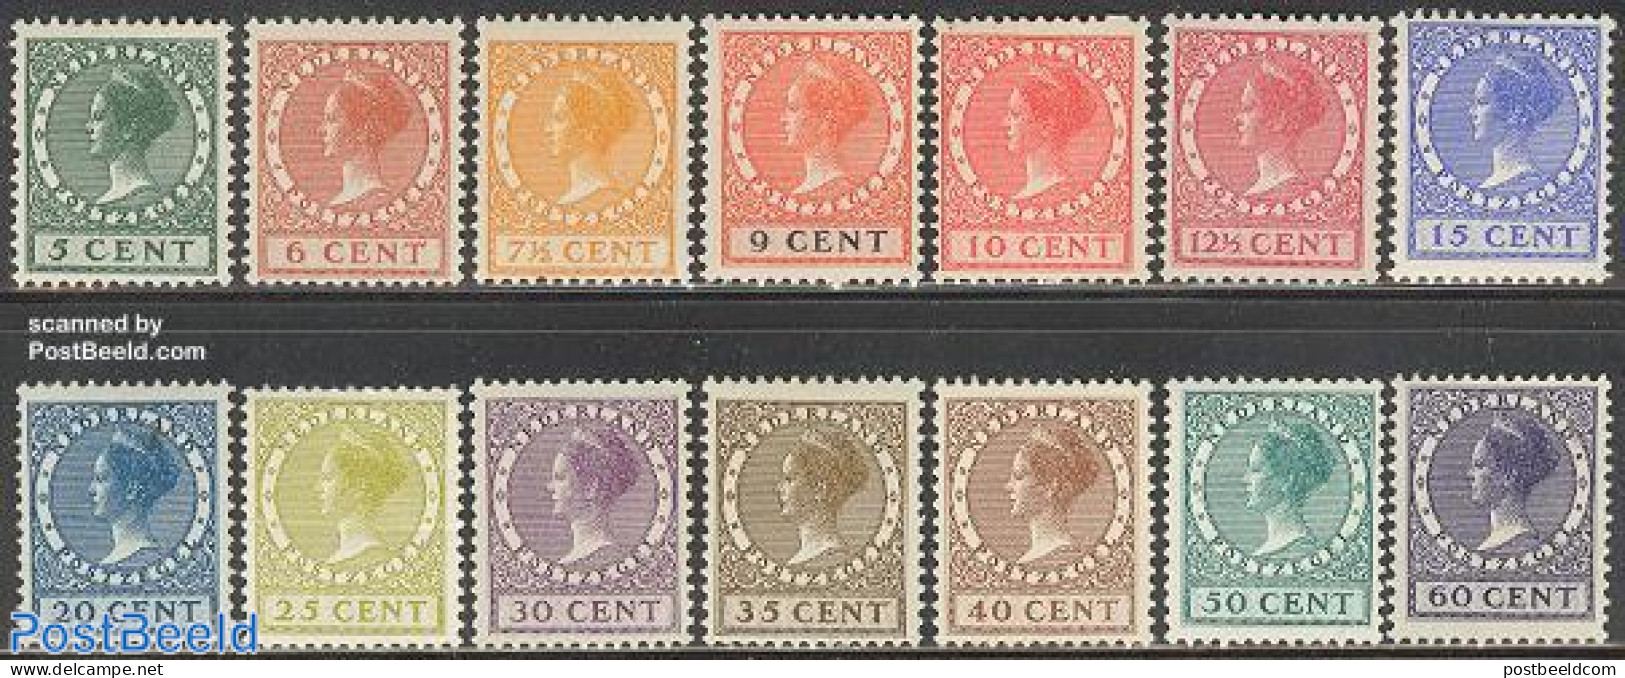 Netherlands 1924 Definitives Without WM 14v, Unused (hinged) - Ungebraucht